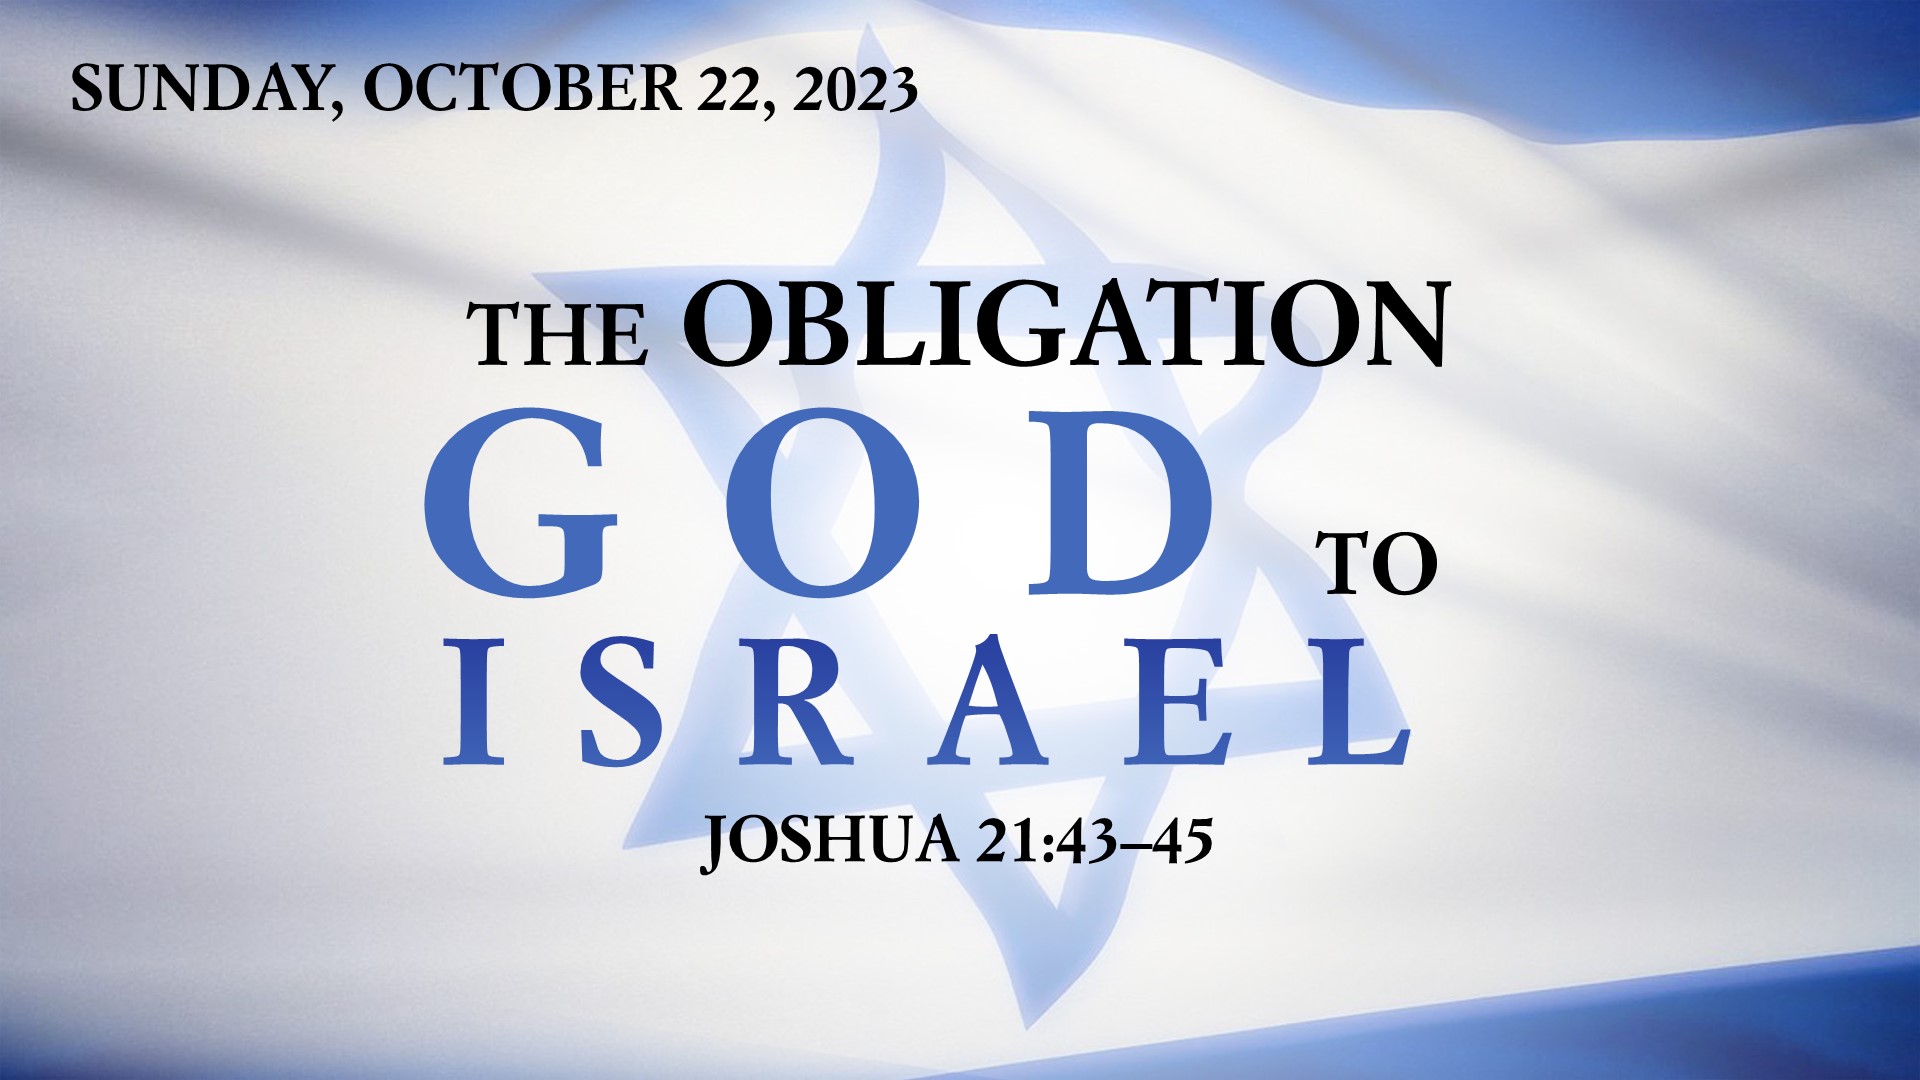 The Obligation of God to Israel